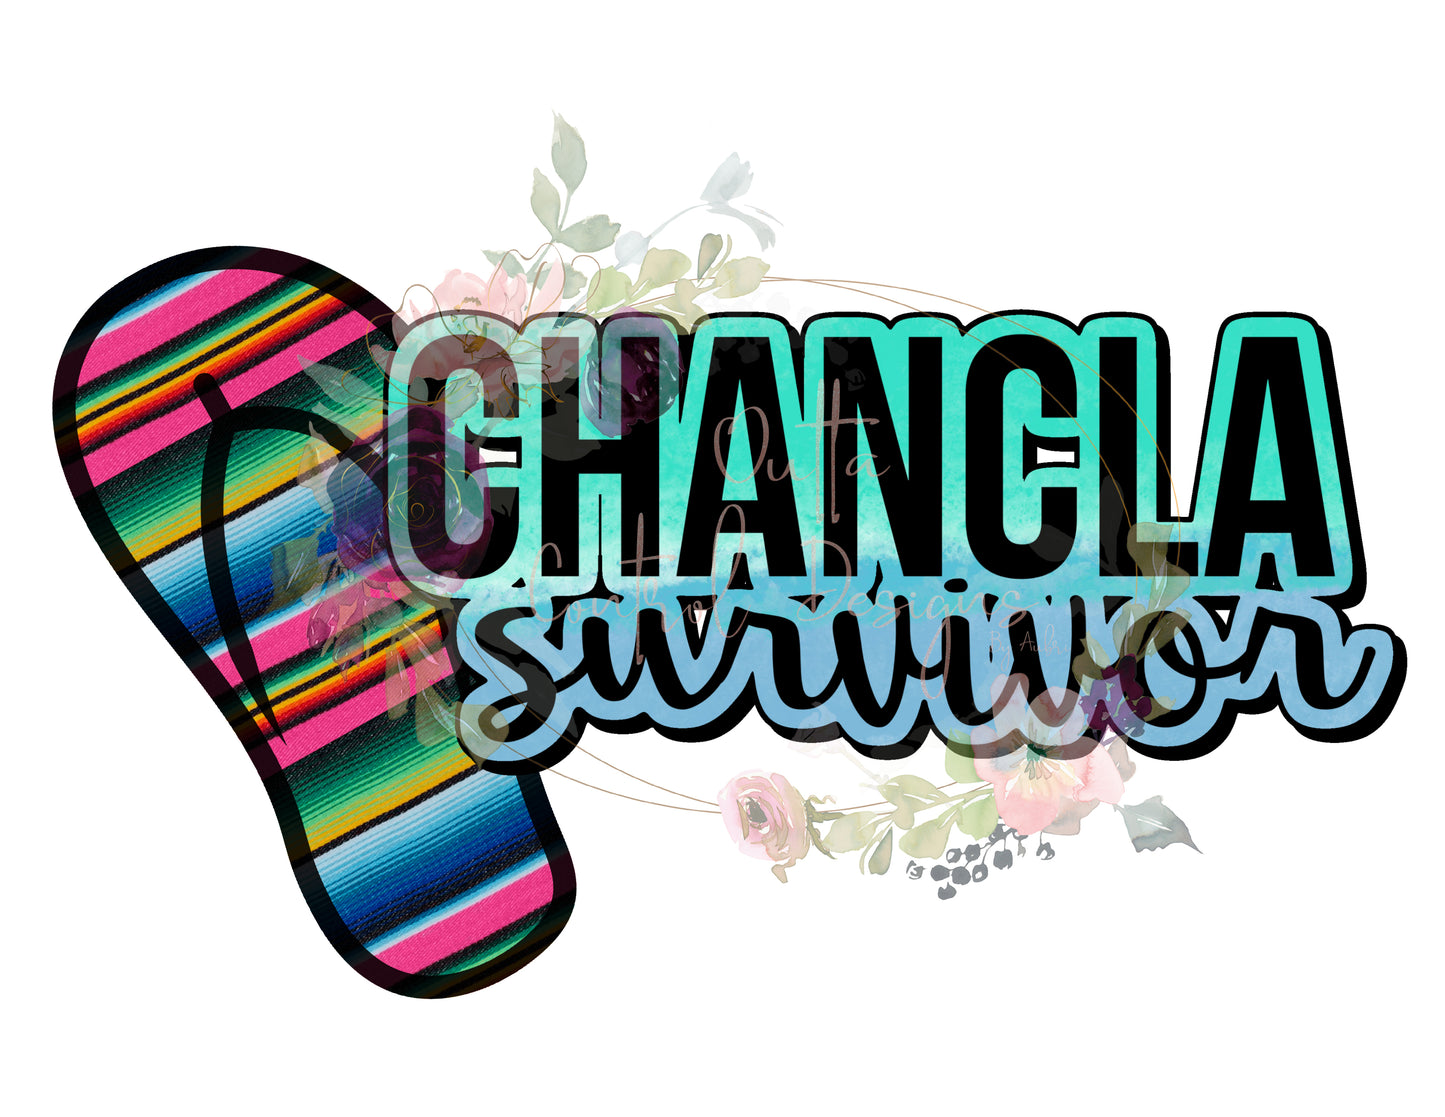 Chancla Survivor Ready To Press Sublimation Transfer